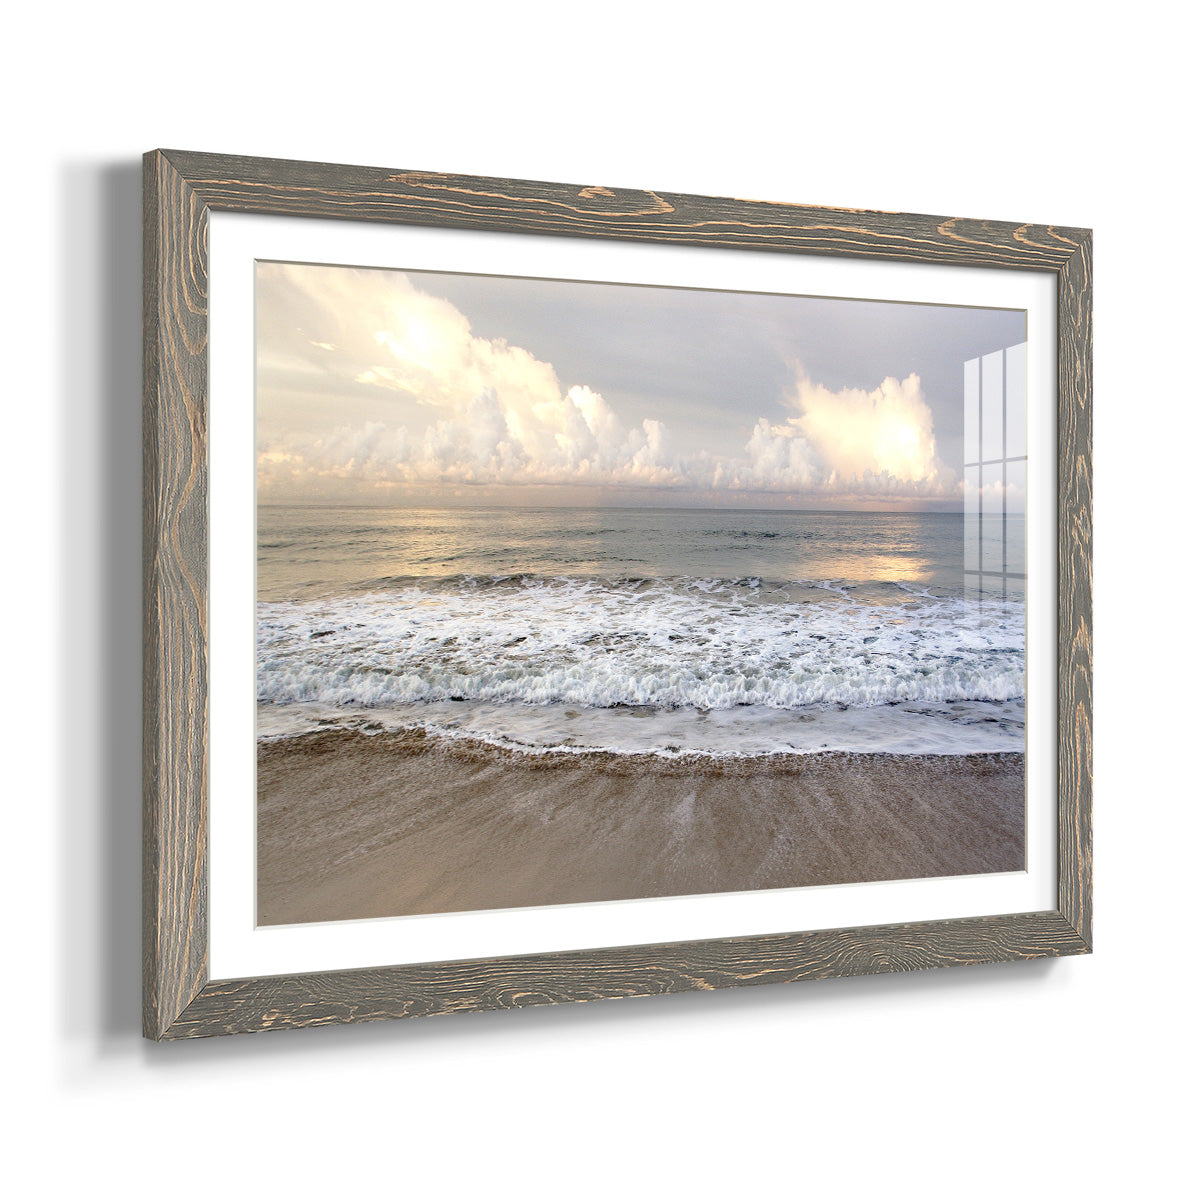 Ebbing Wave-Premium Framed Print - Ready to Hang